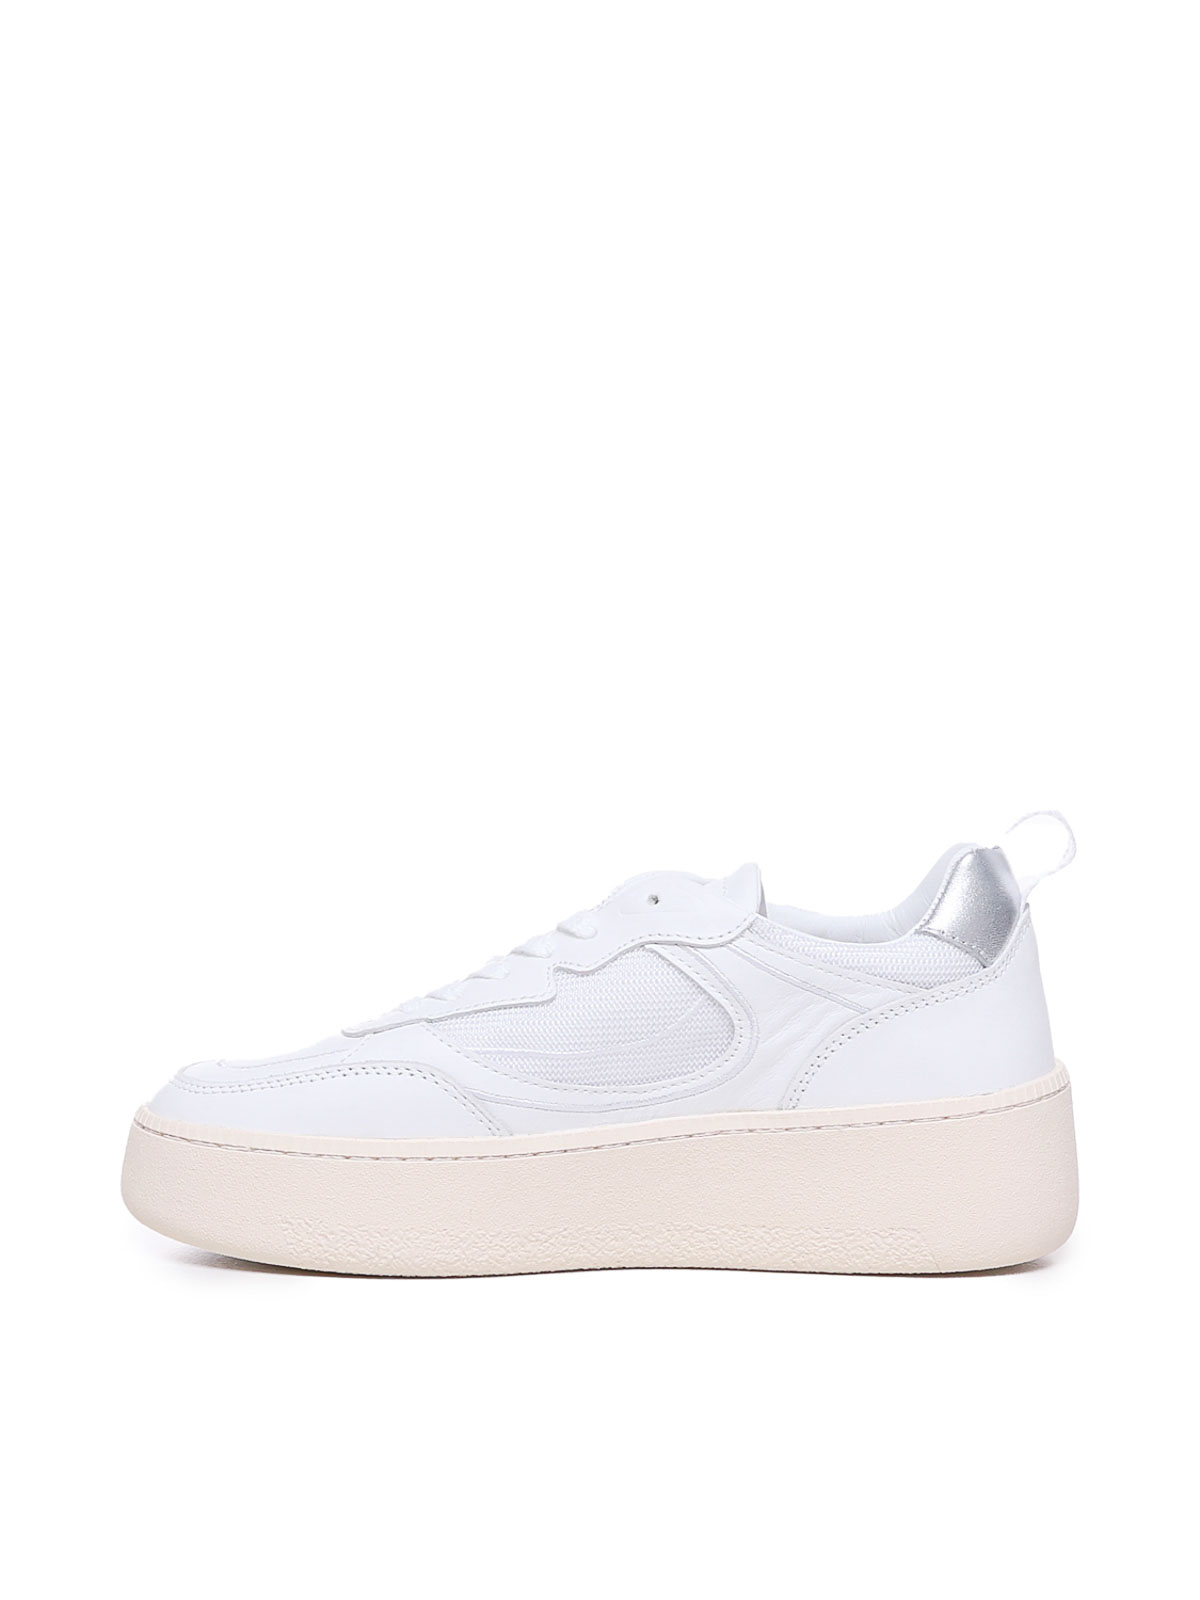 Shop Date Sfera Laminated Sneakers In White